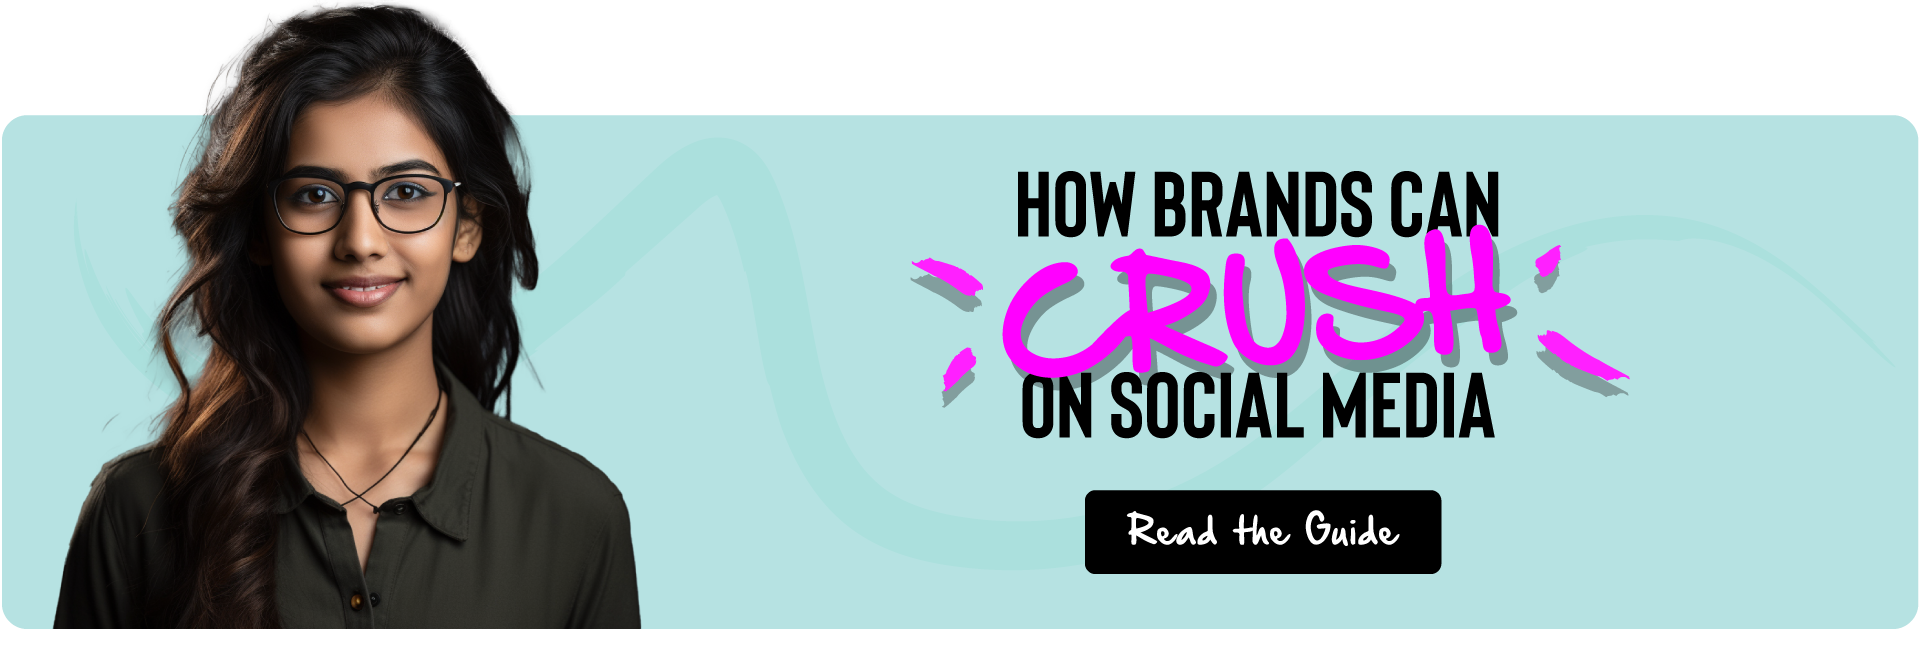 How-Brands-Can-Crush-Social-Media-Banner